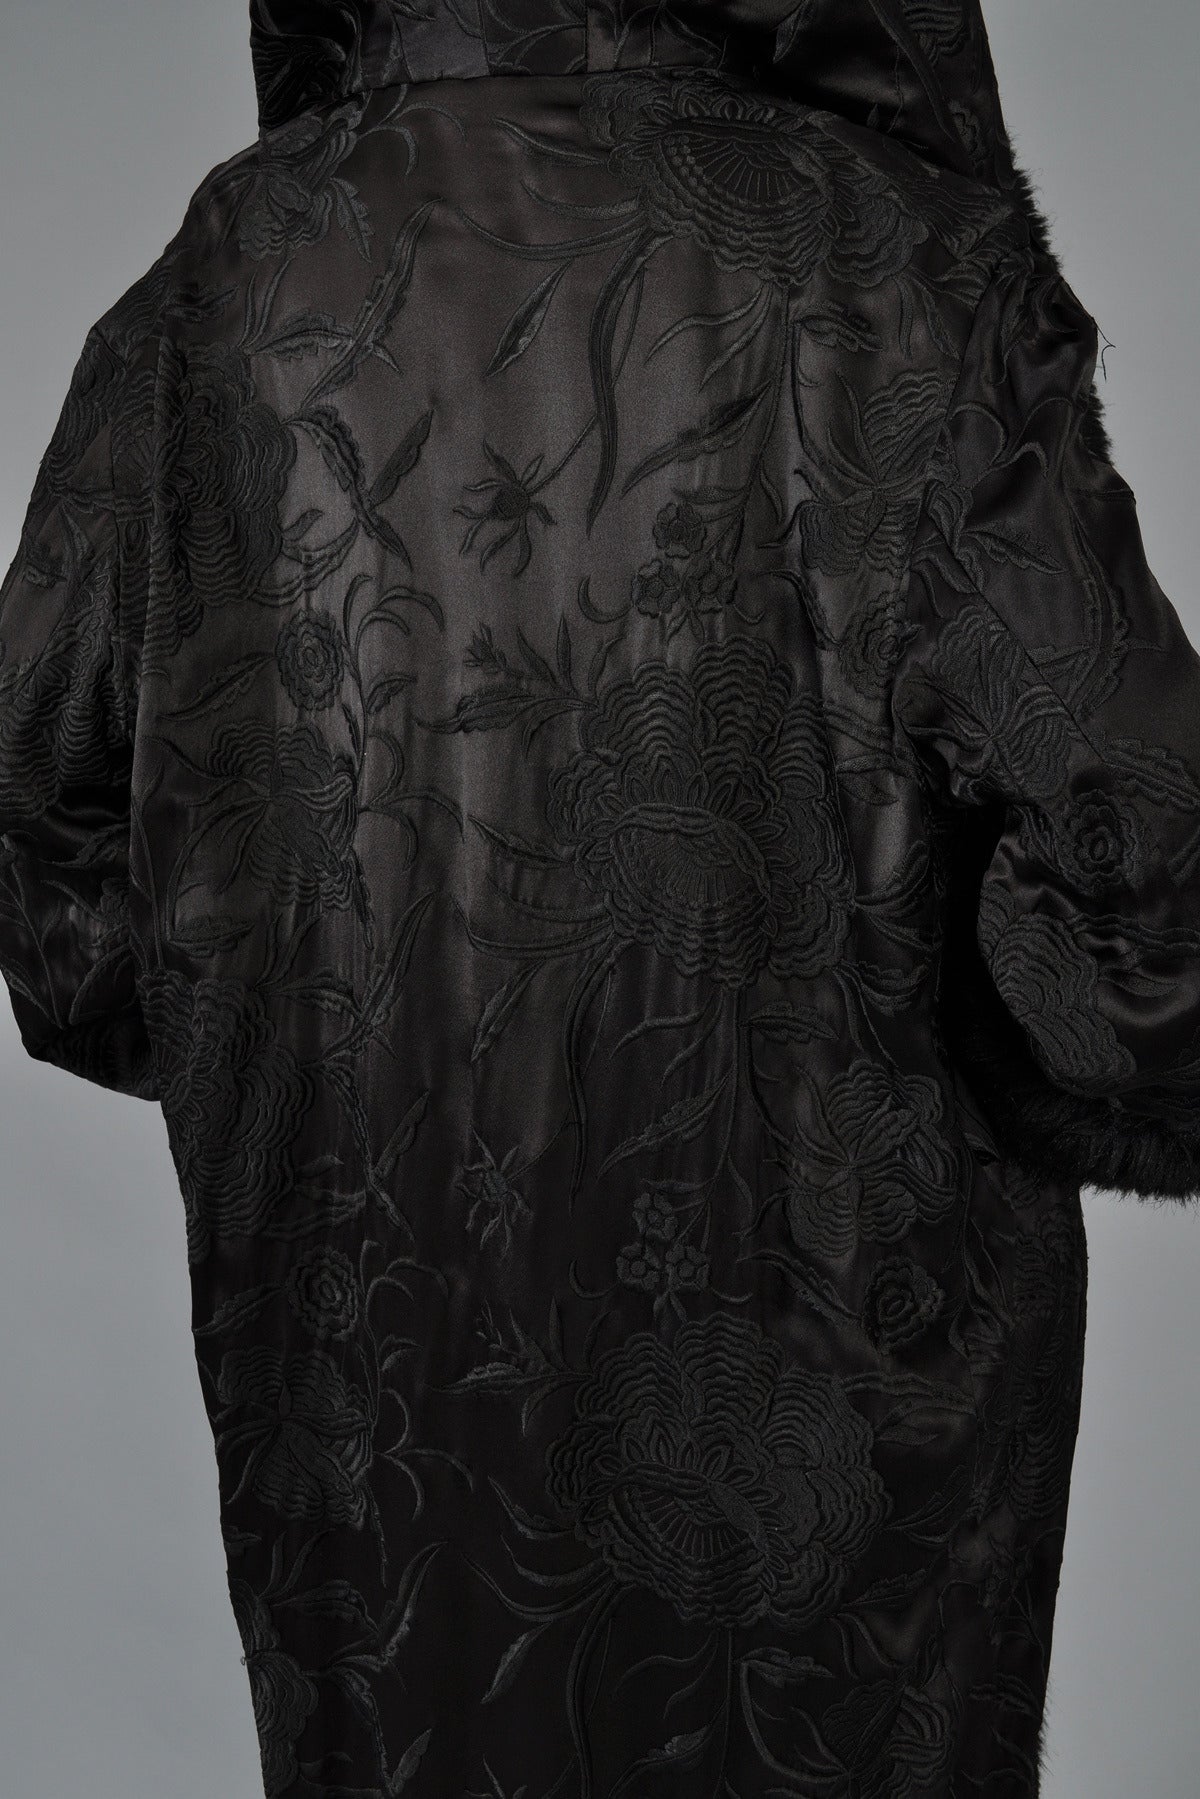 Norma Kamali Embroidered Satin Coat with MASSIVE Fur-lined Hood 3